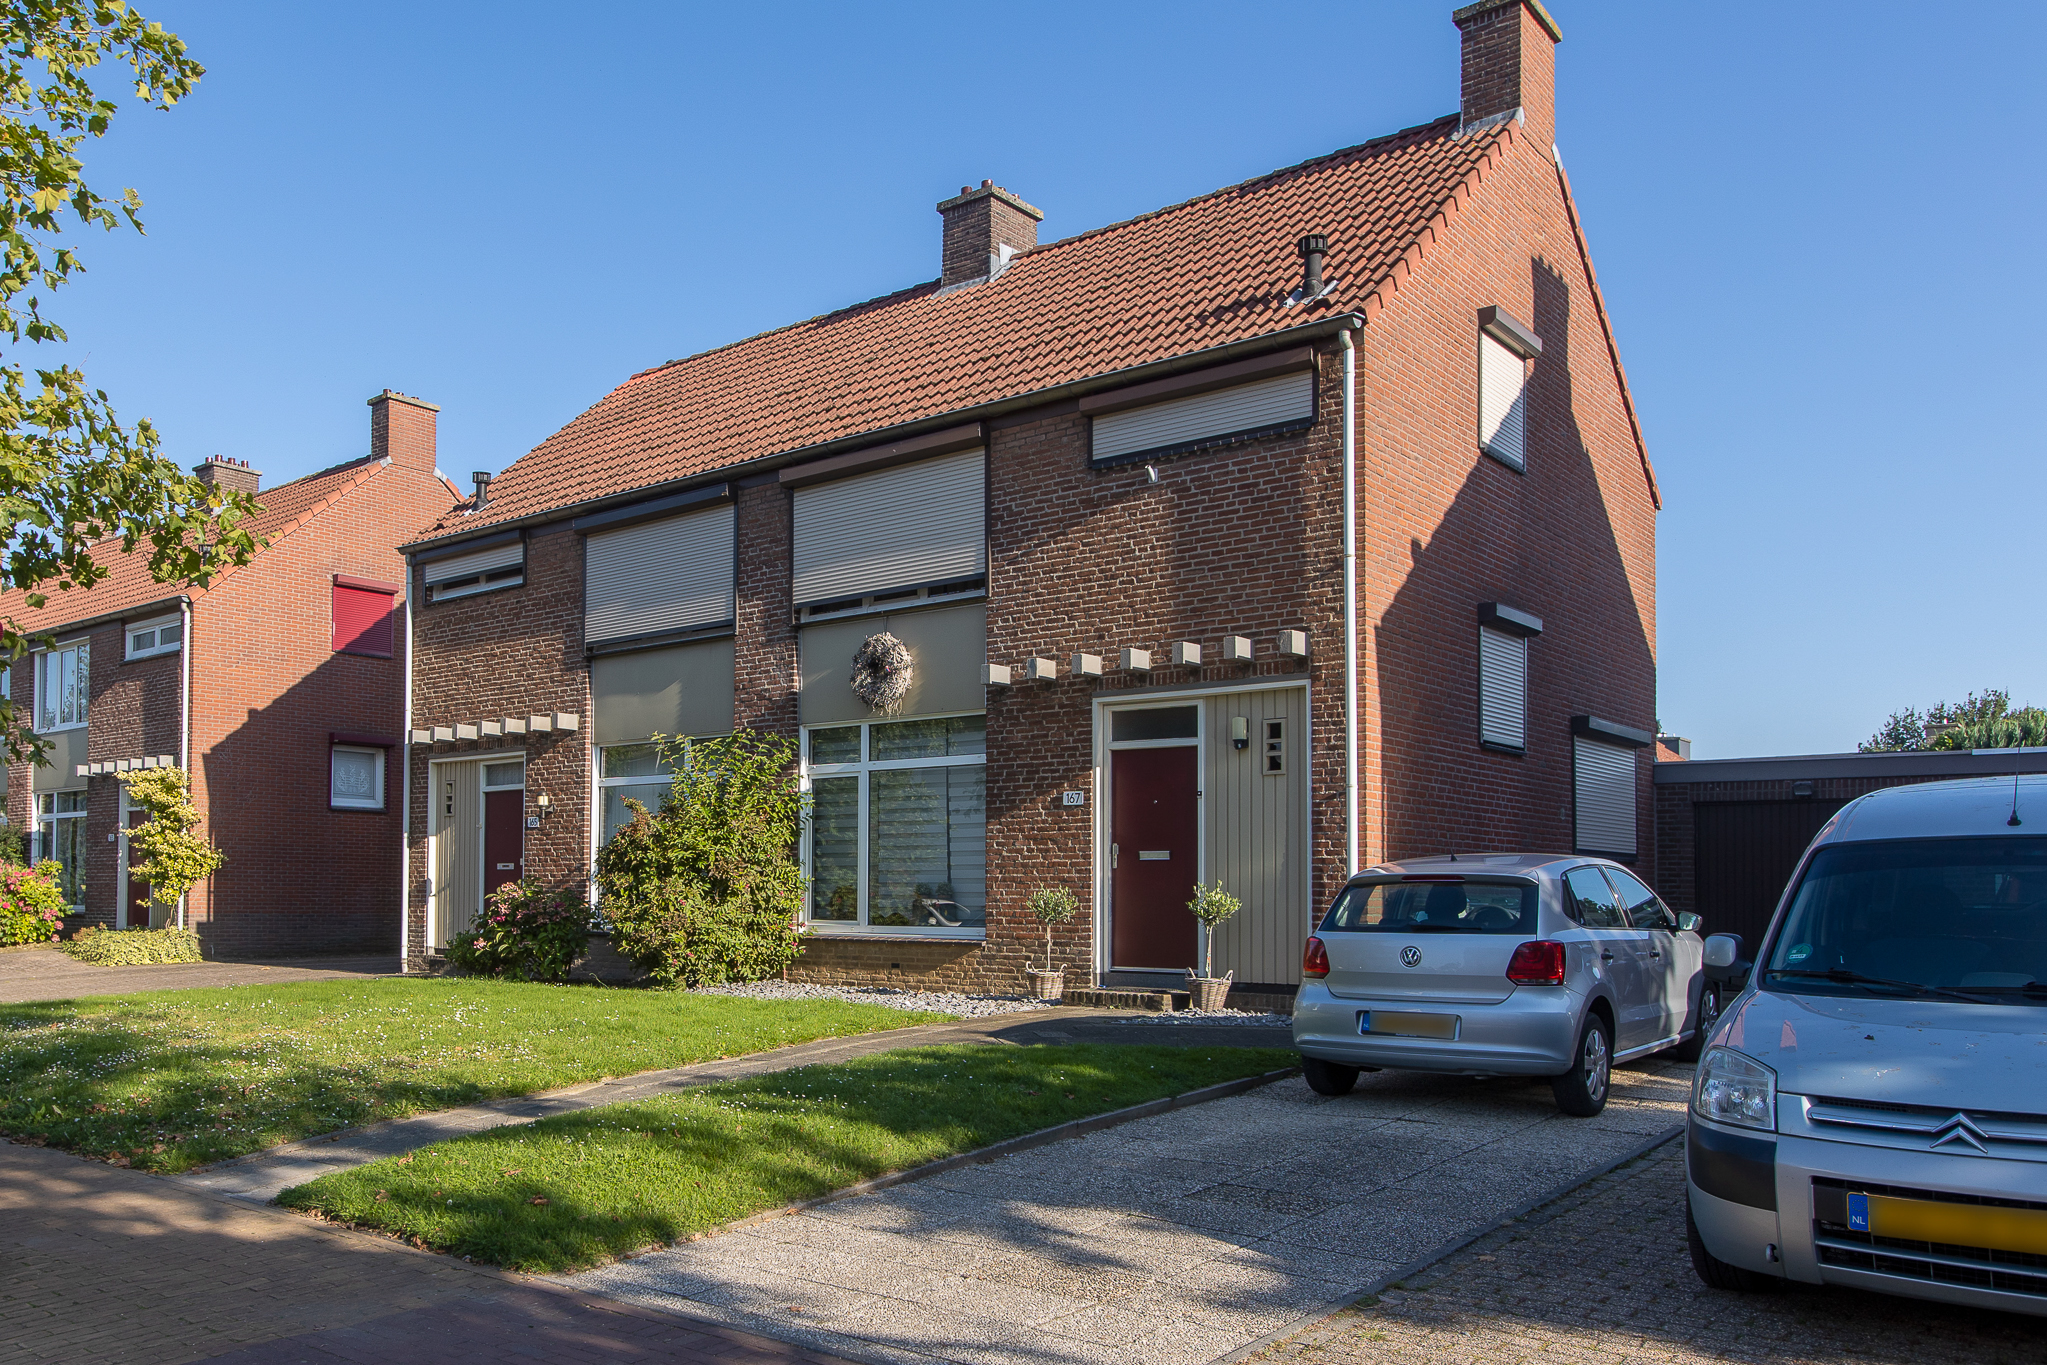 Burgemeester Savelberglaan 165, 6461 GN Kerkrade, Nederland